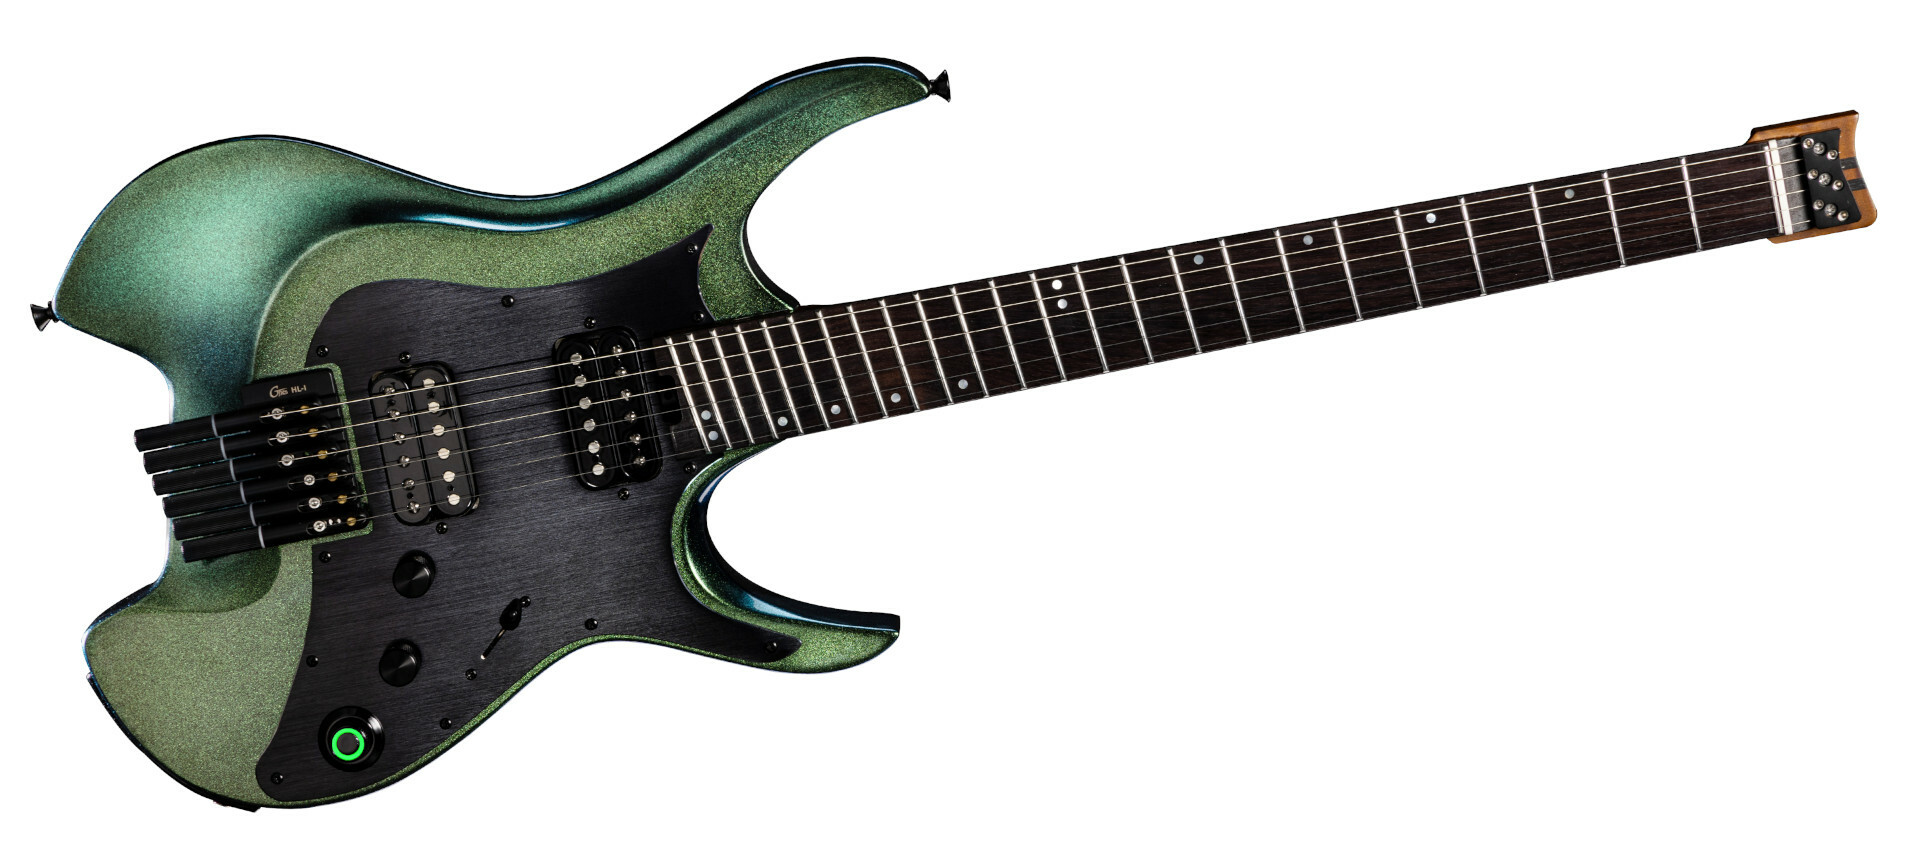 Mooer GTRS Guitars Wing 900 Intelligent Guitar (W900) with Wireless System - Aurora Green